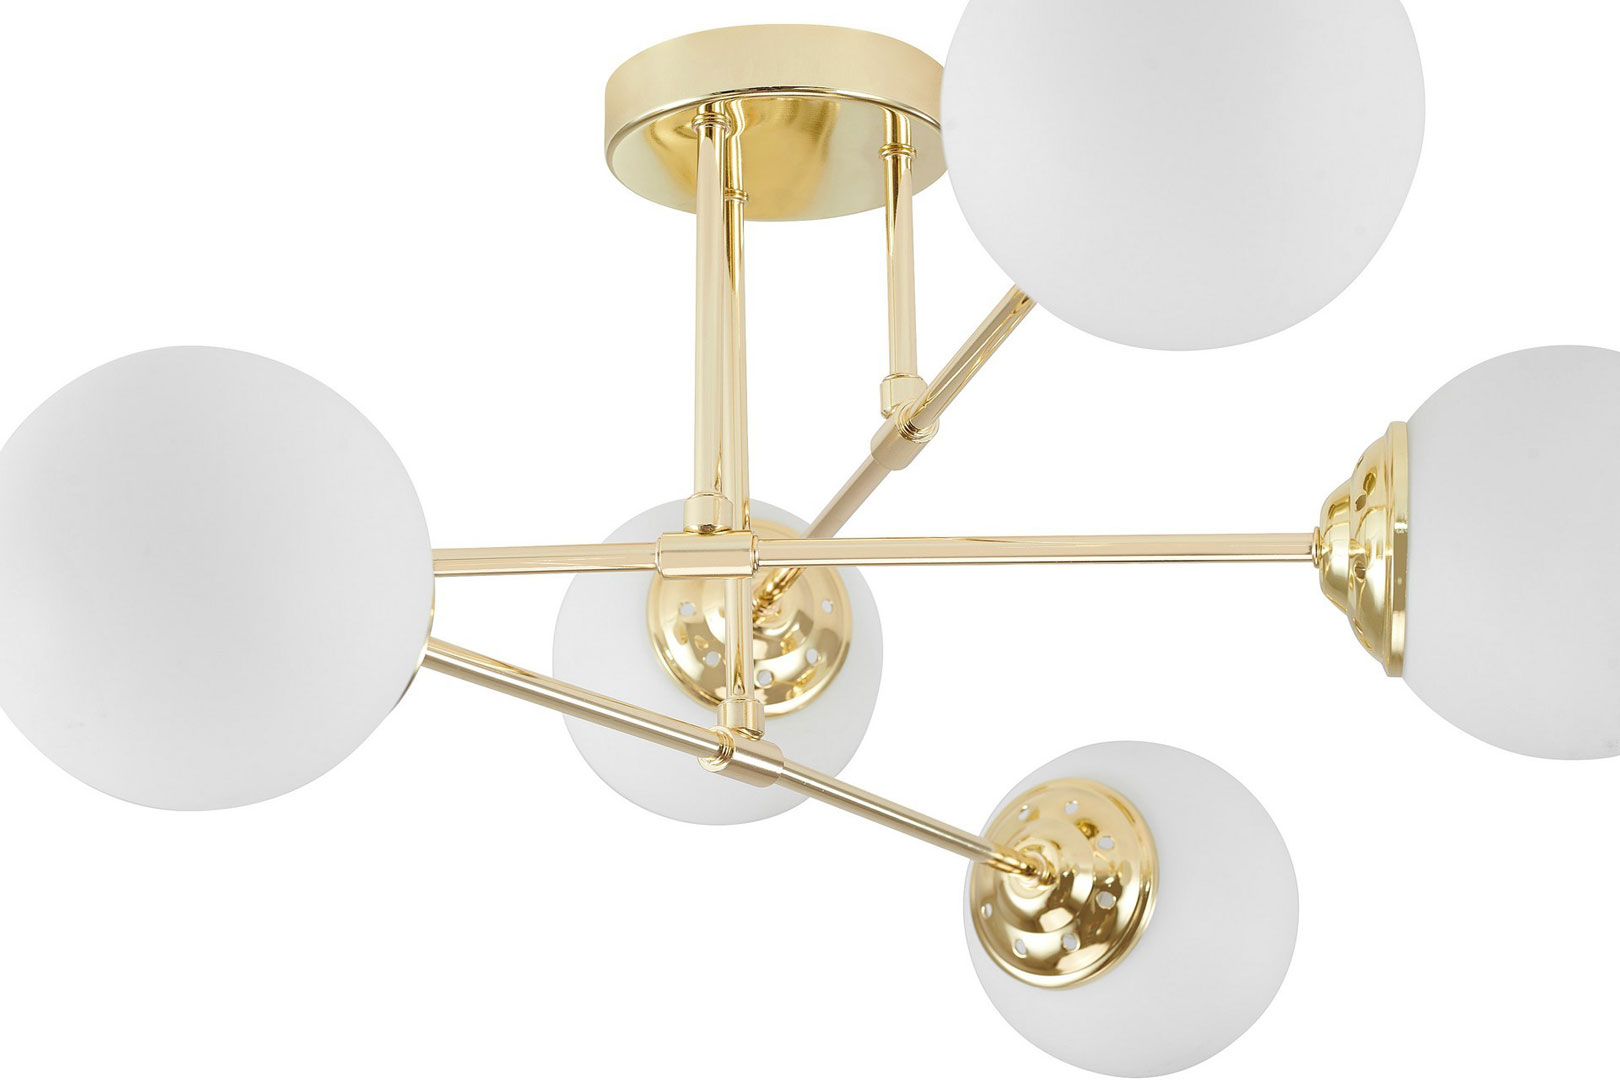 Zlaté stropné svietidlo, asymetrický tvar, kovové trubice, biele gule, klasická zlatá farba - FINO - Lampit obrázok 4